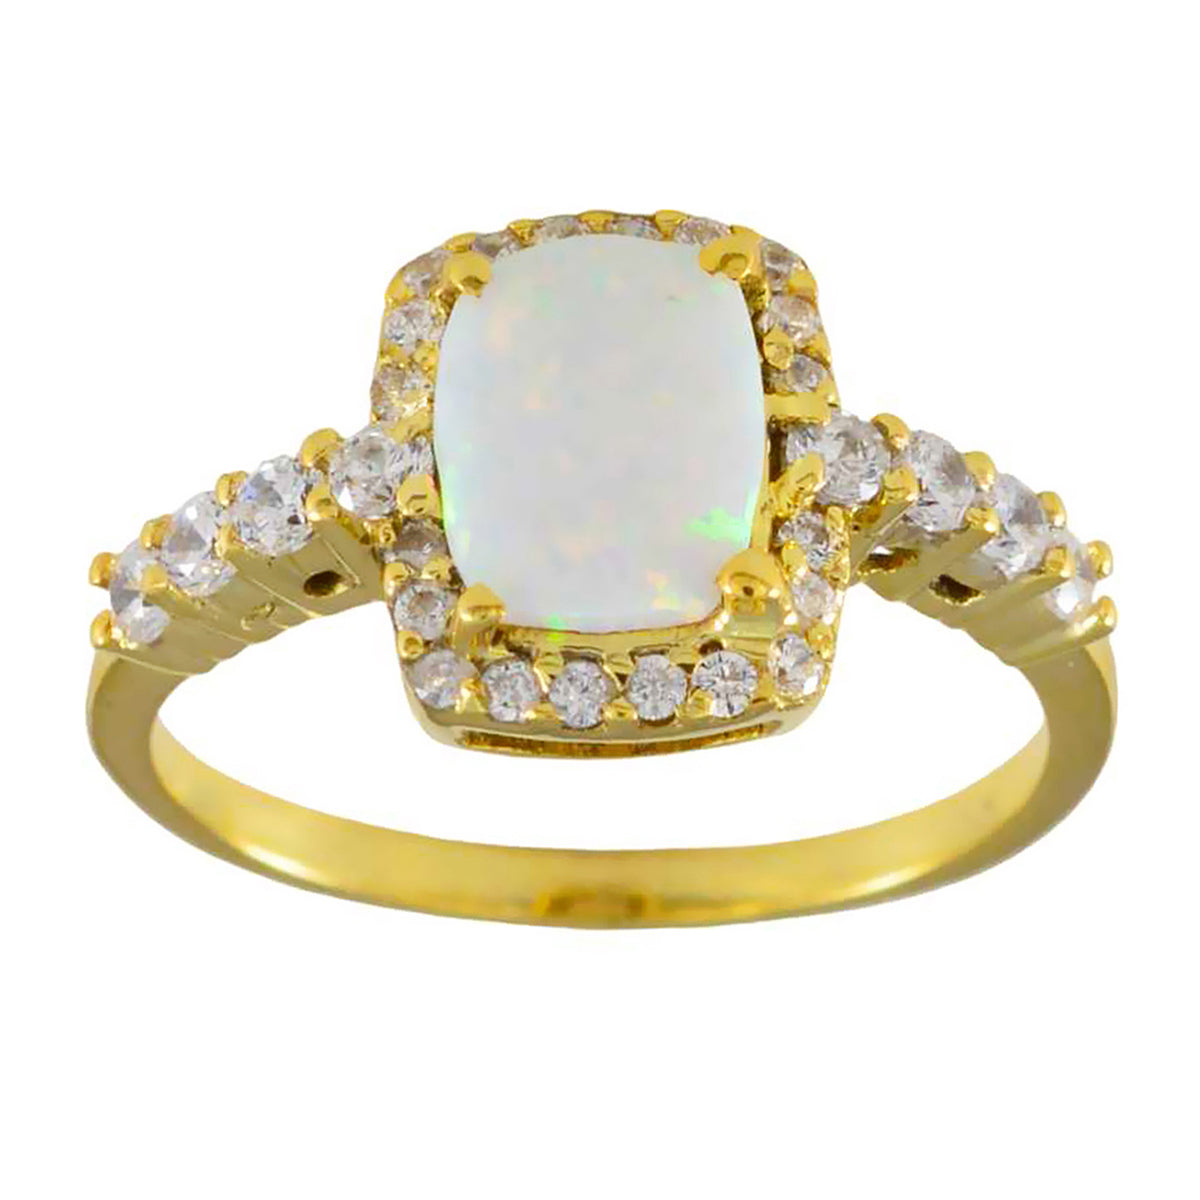 Riyo Prime zilveren ring met geelgouden opaal CZ steen achthoekige vorm Prong setting antieke sieraden verjaardagsring